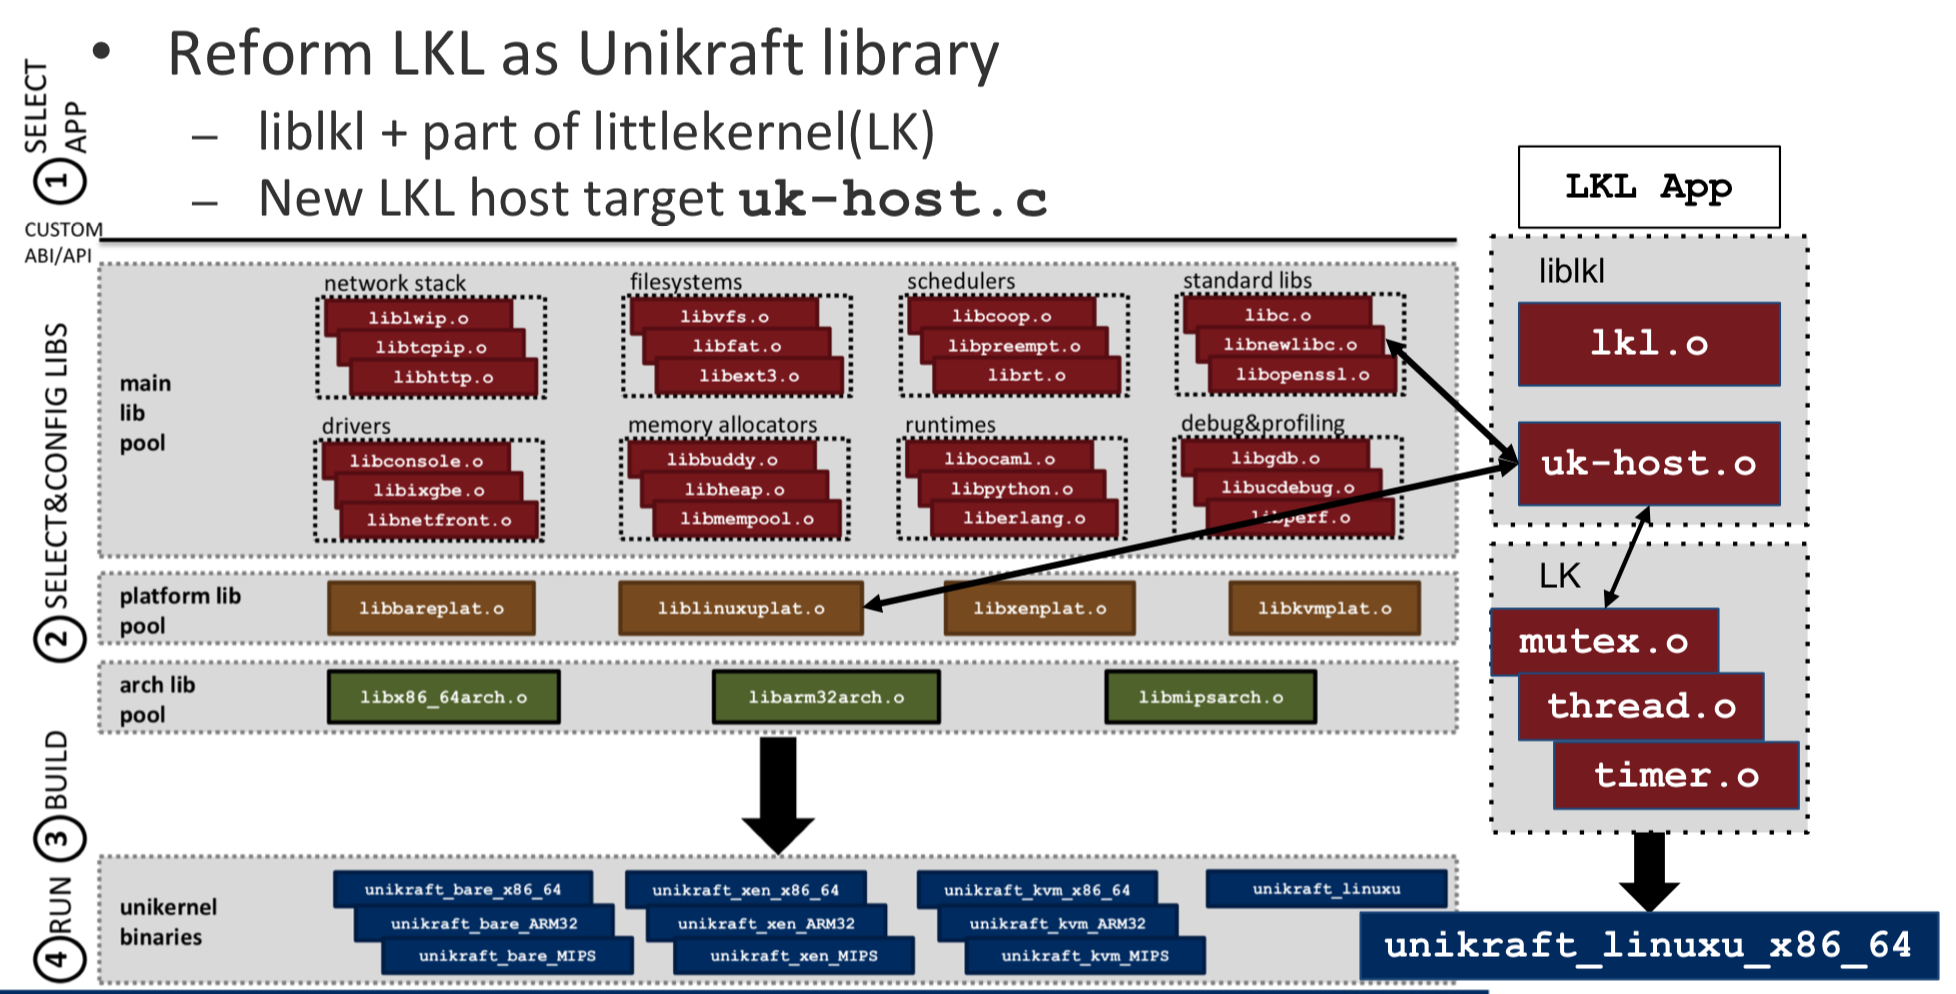 The architecture of LKL on Unikraft v2